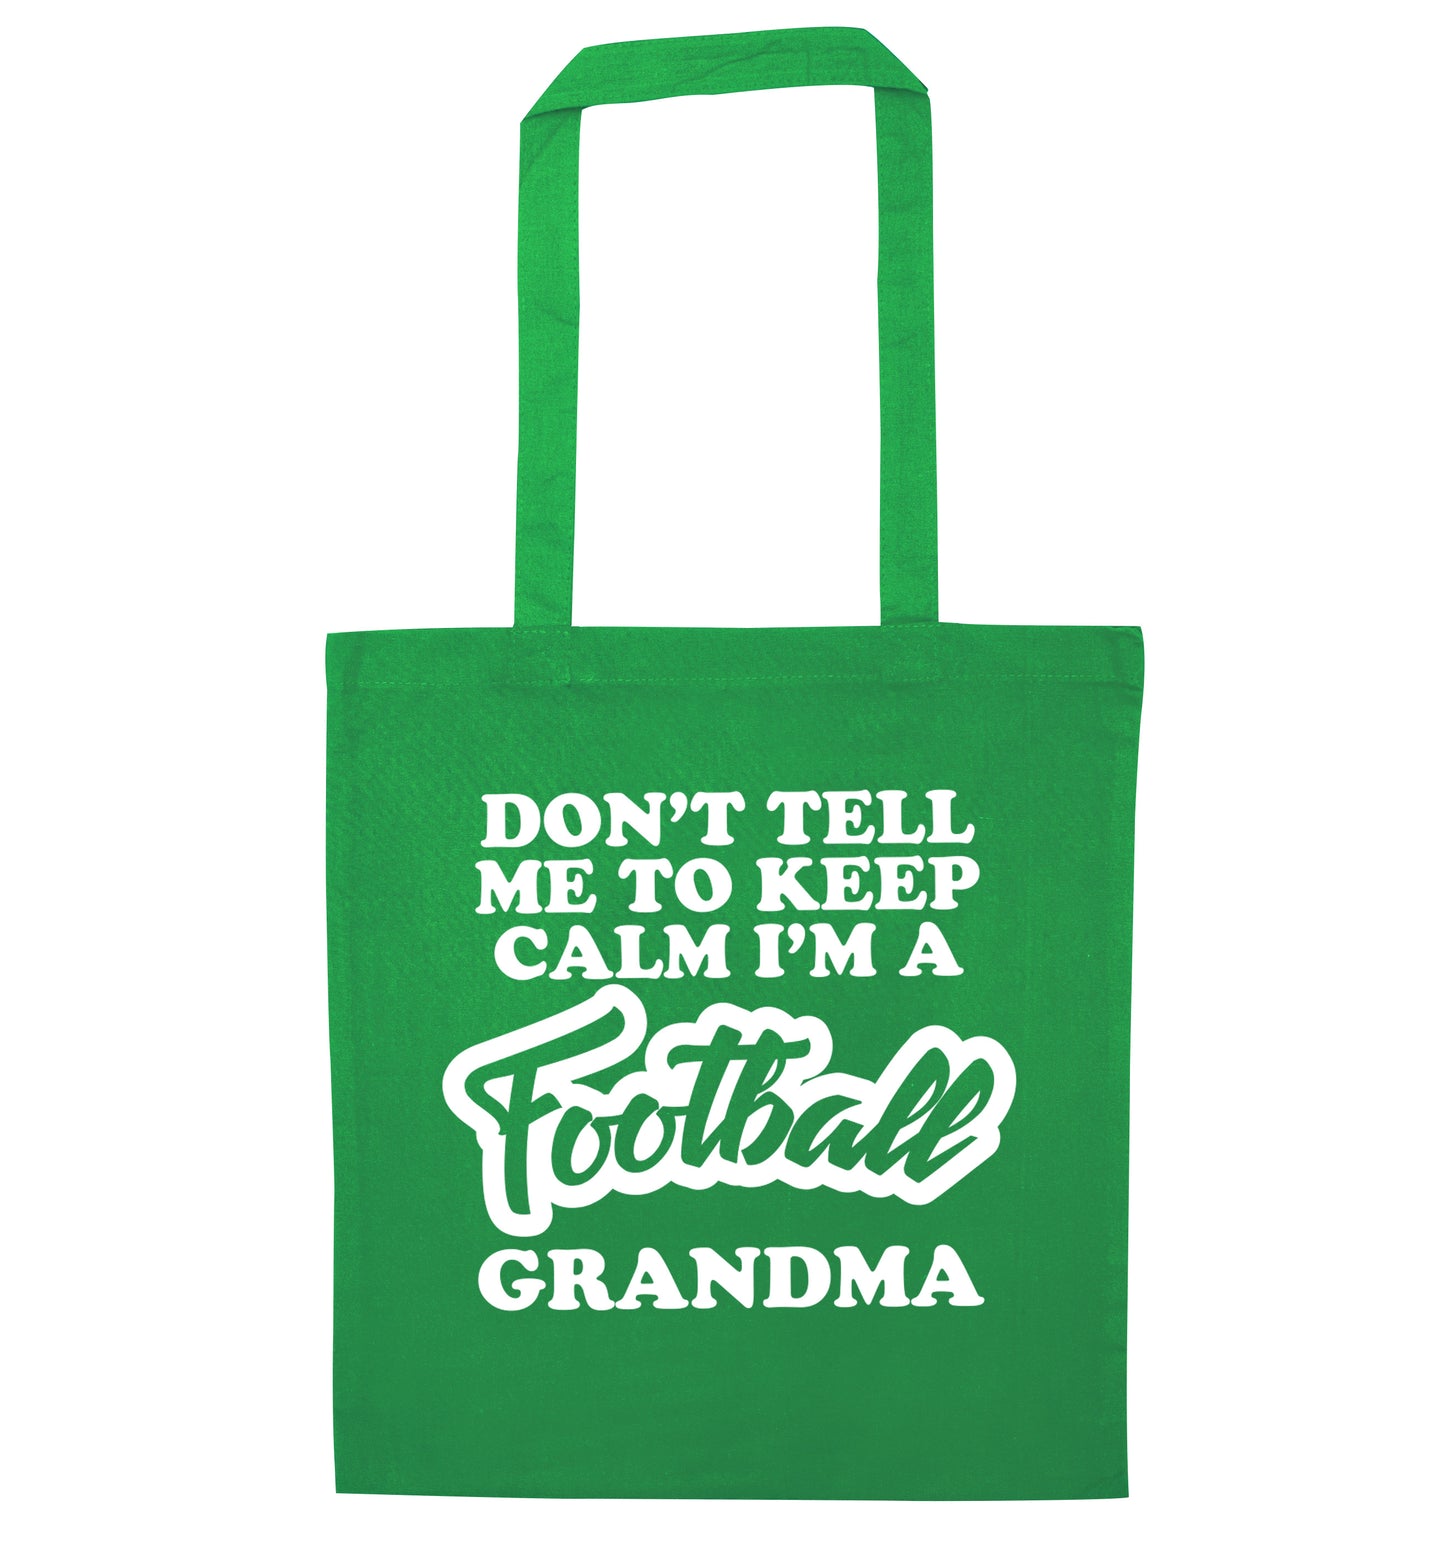 Don't tell me to keep calm I'm a football grandma green tote bag